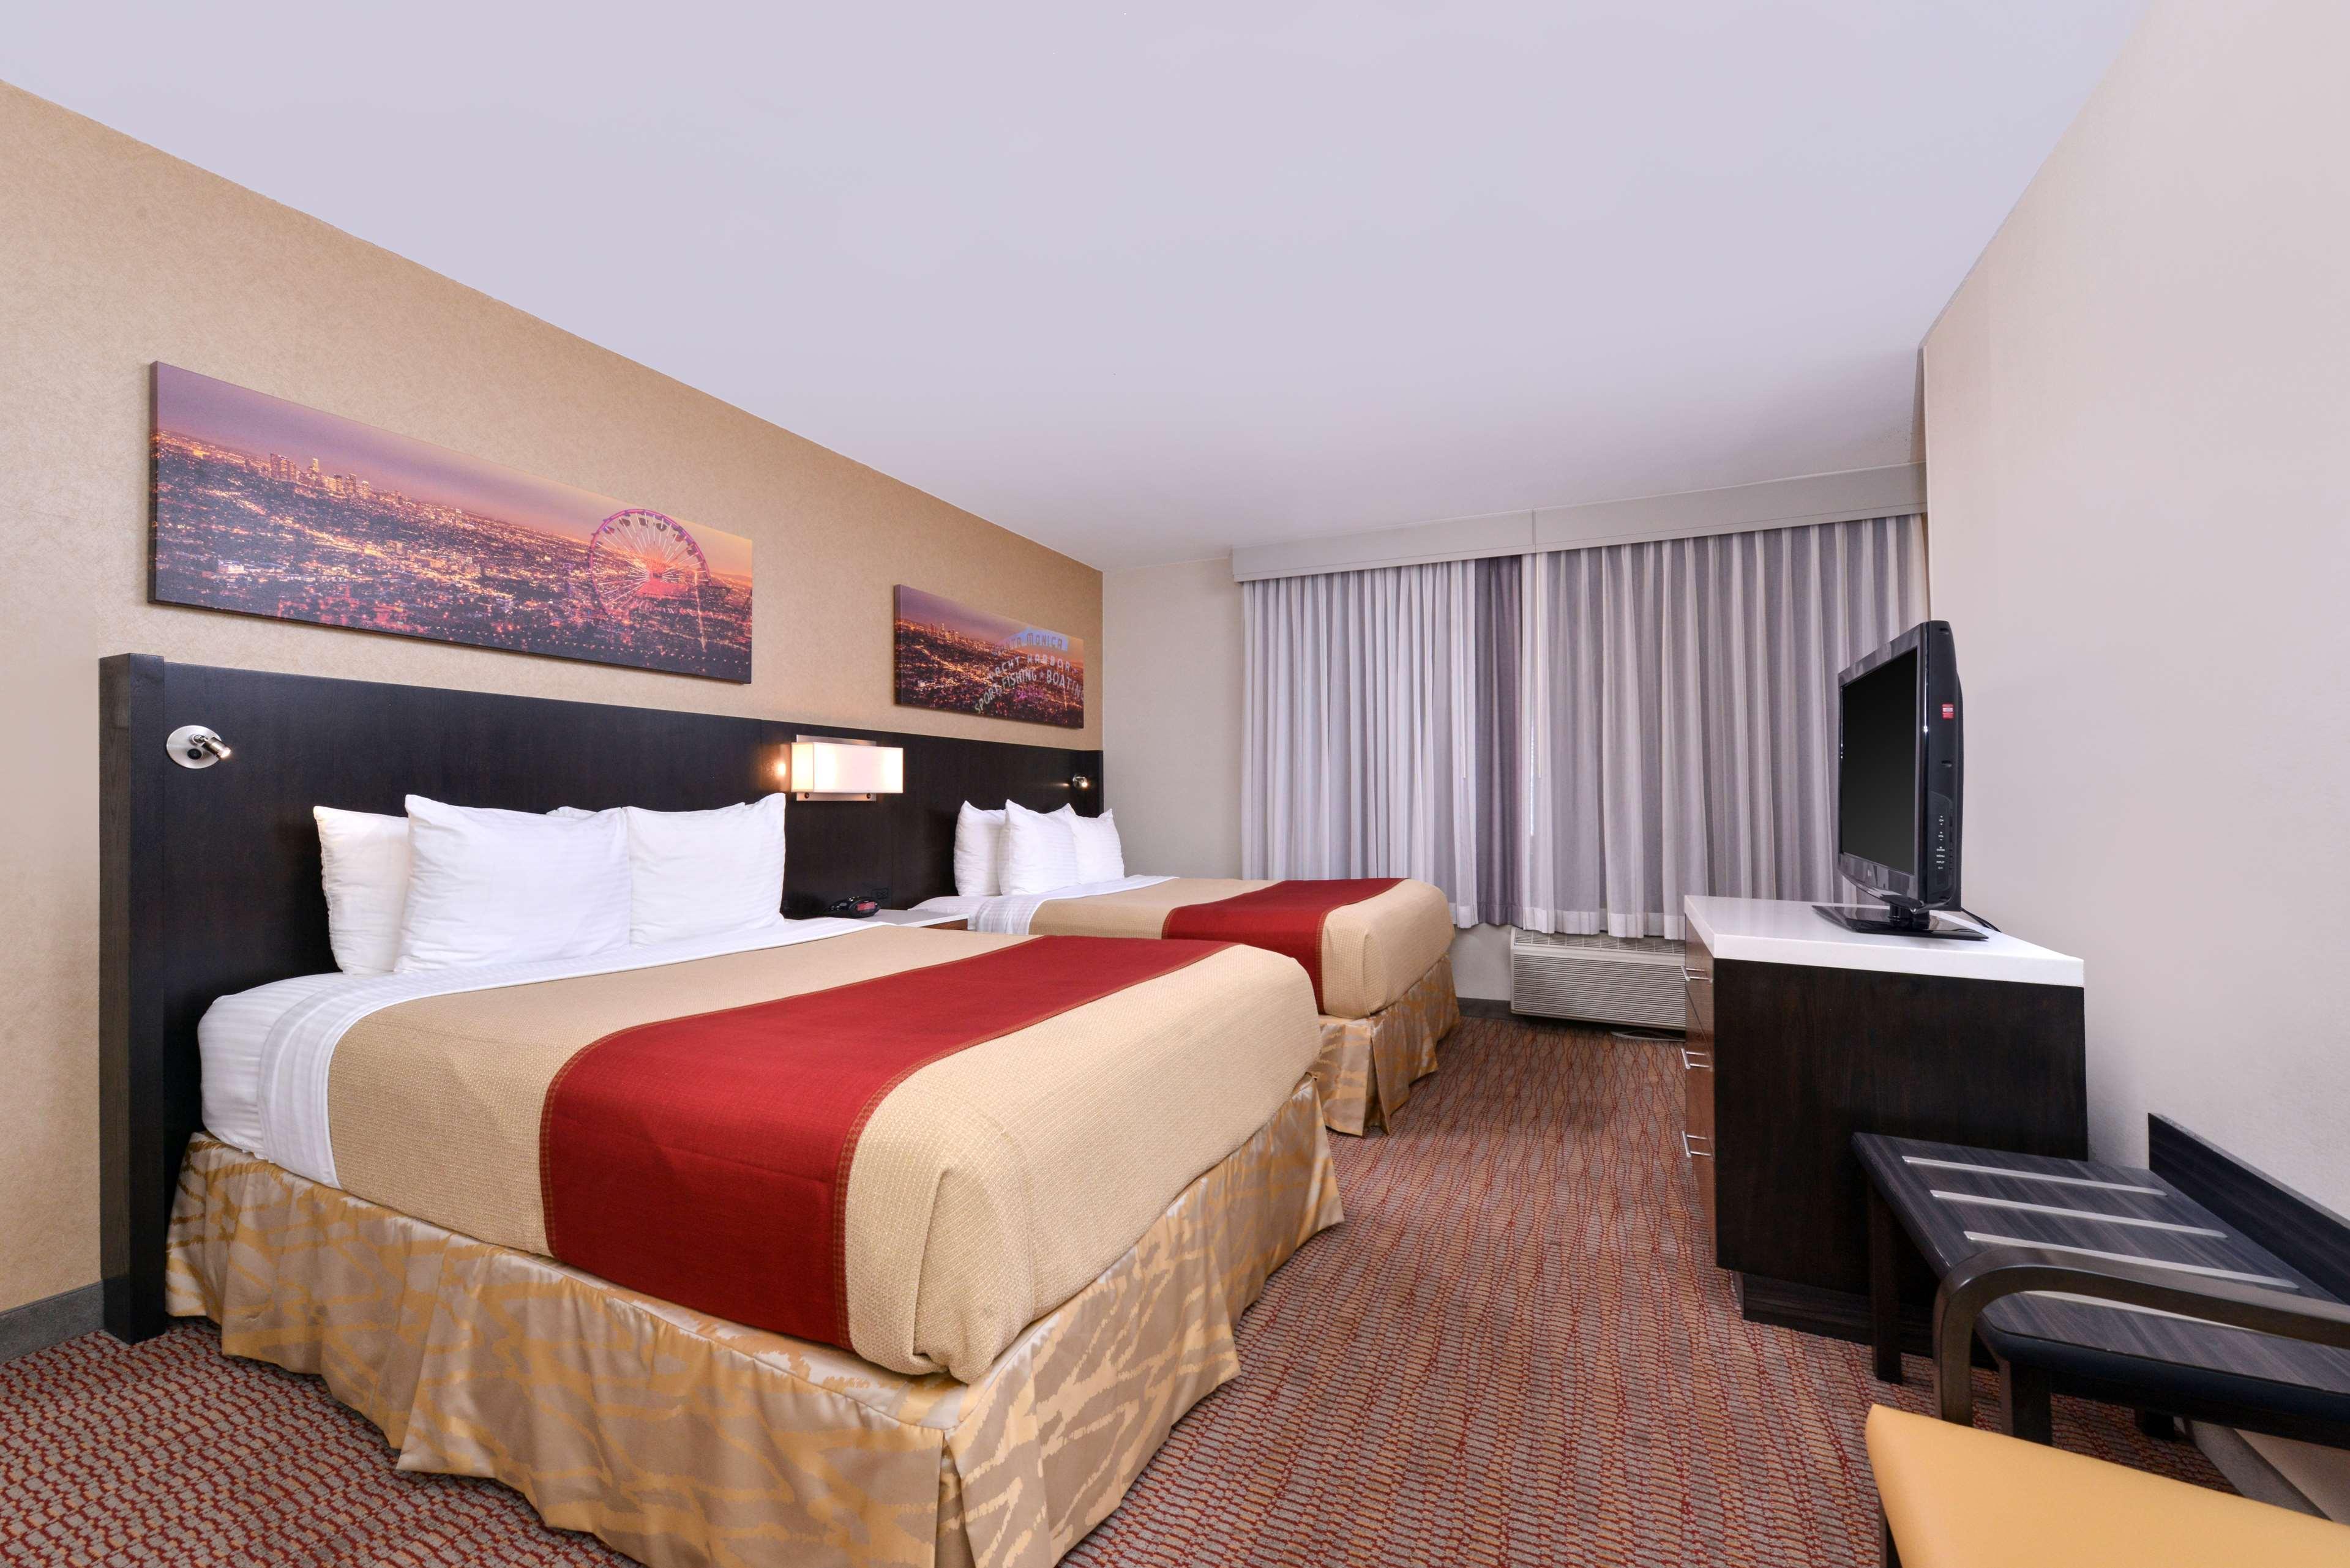 Best Western Royal Palace Inn & Suites Los Angeles Zewnętrze zdjęcie